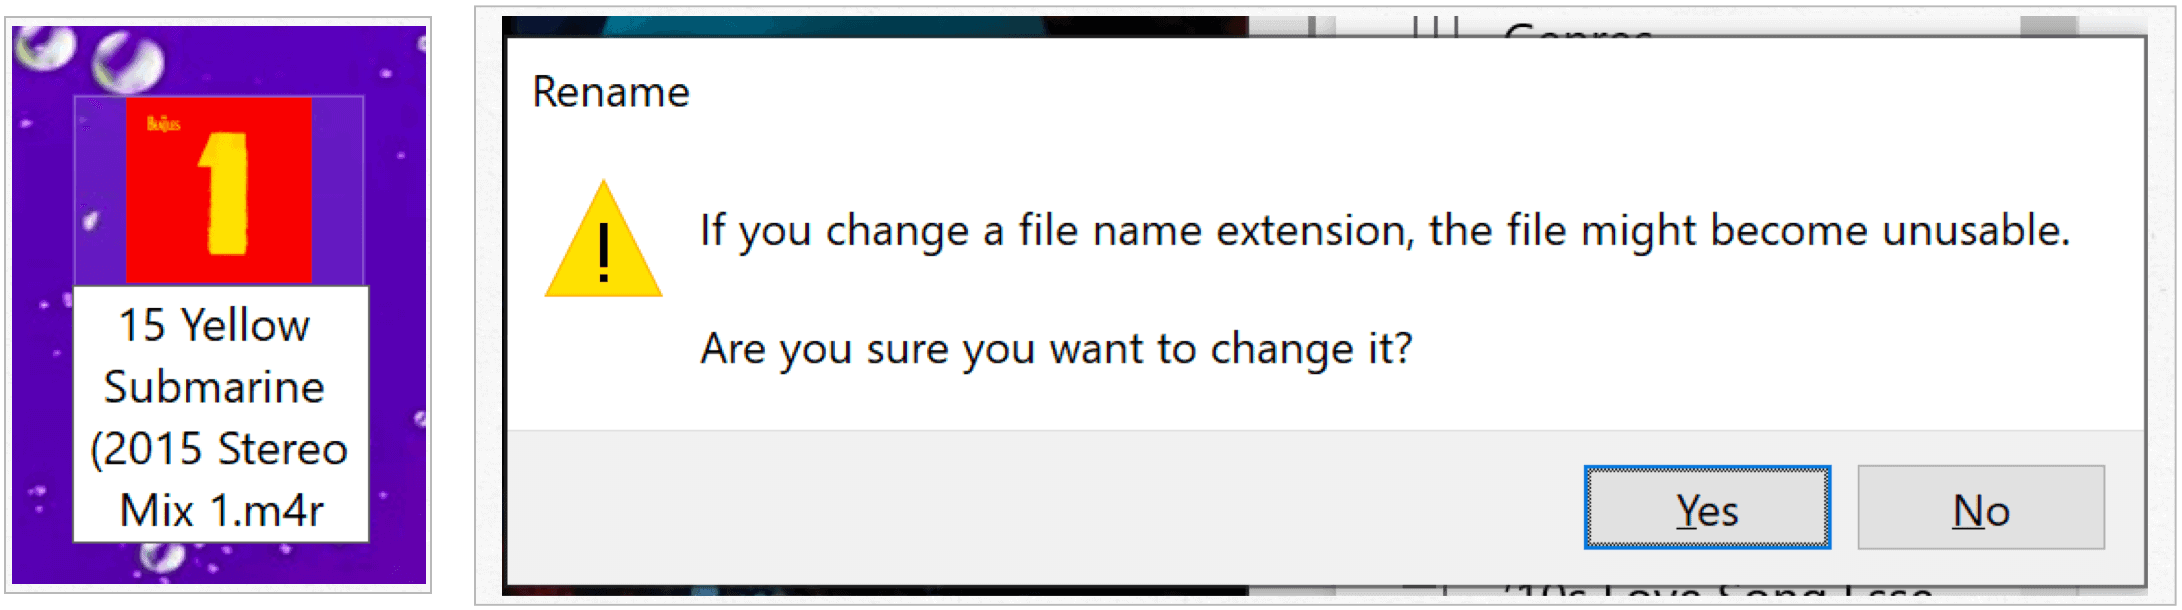 Windows confirm file extension change